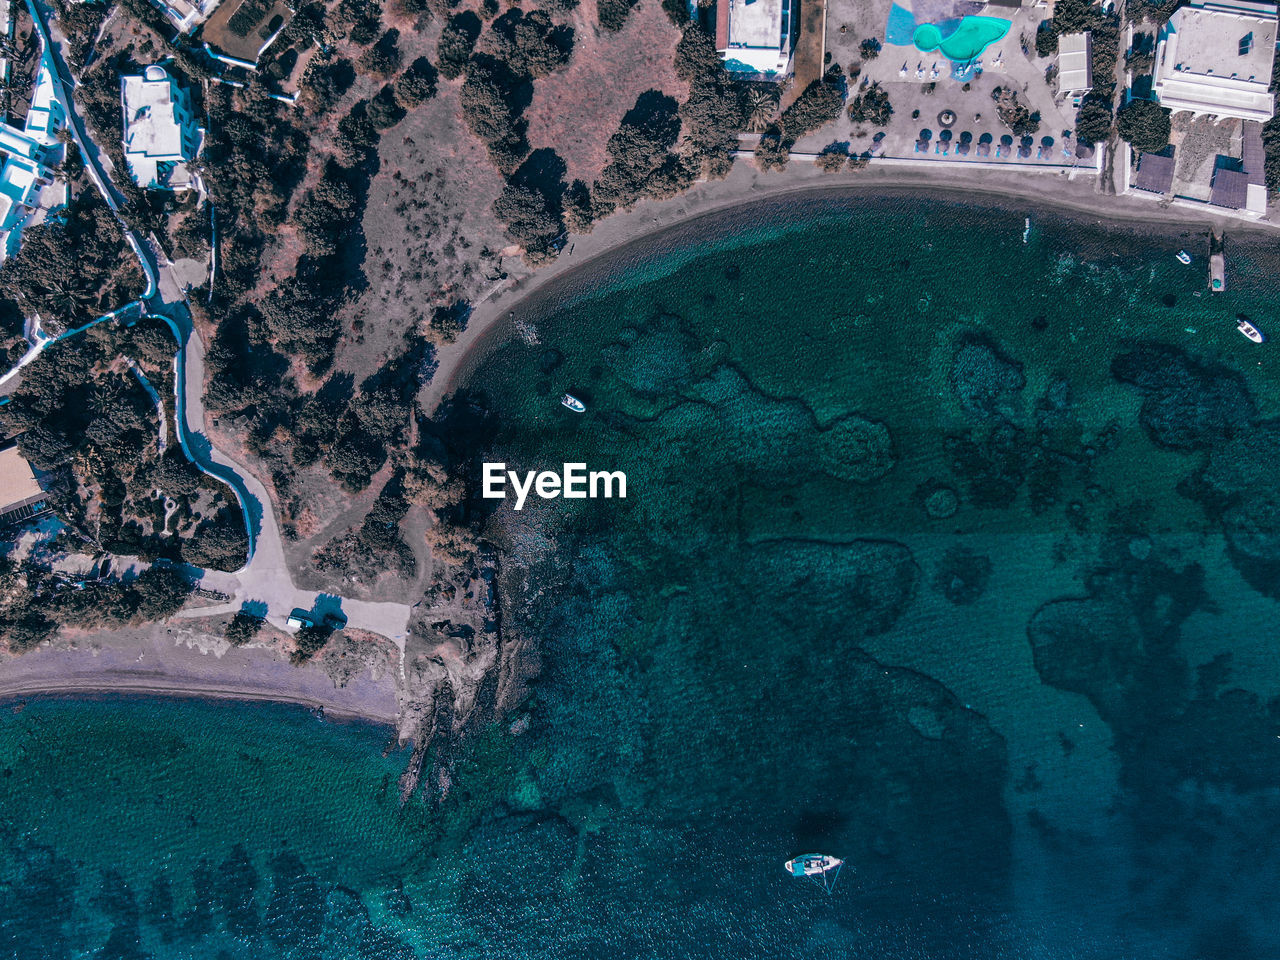 Drone view of leros beach